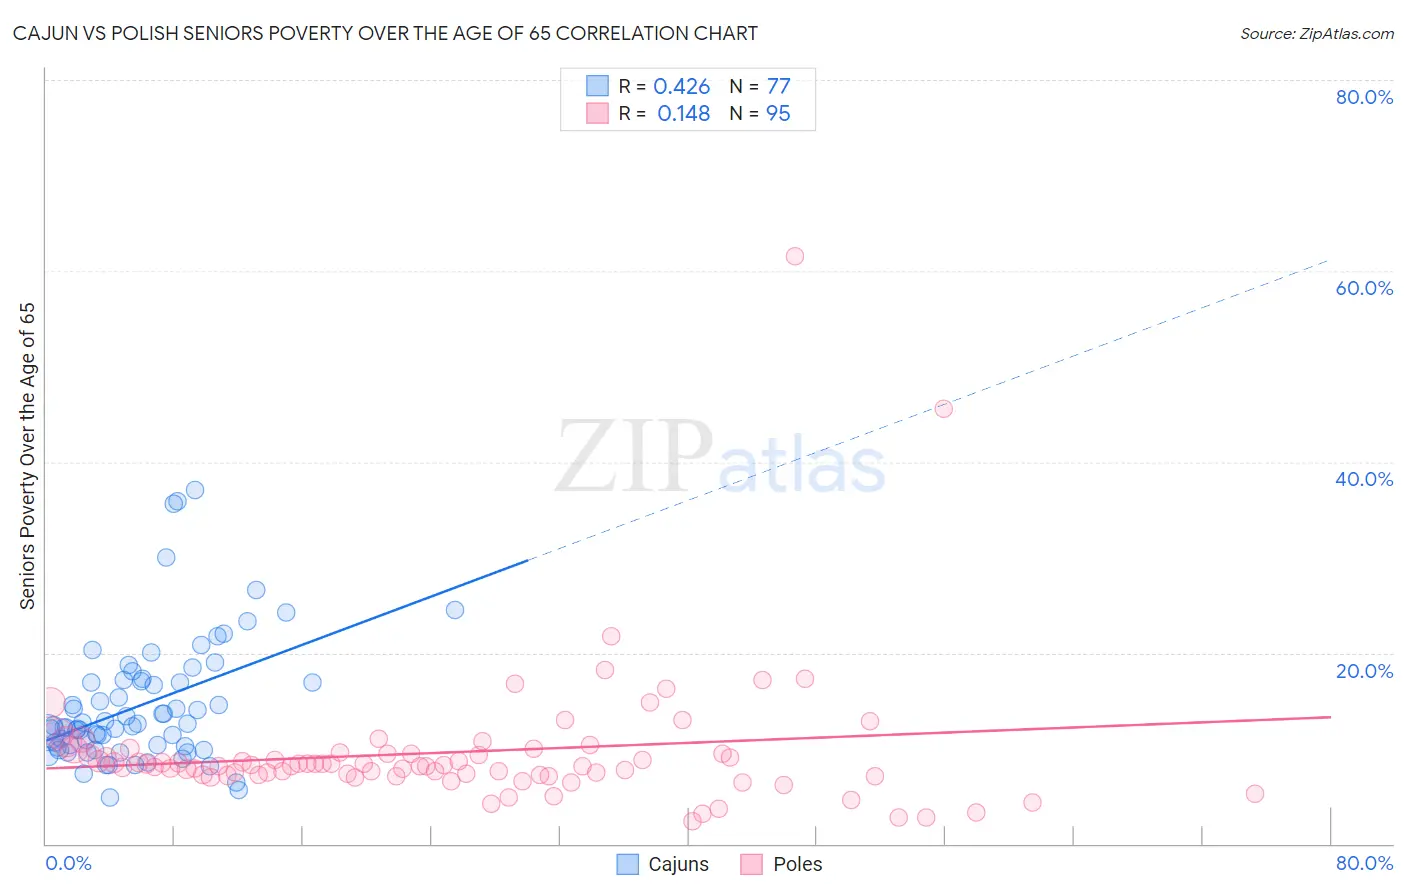 Cajun vs Polish Seniors Poverty Over the Age of 65